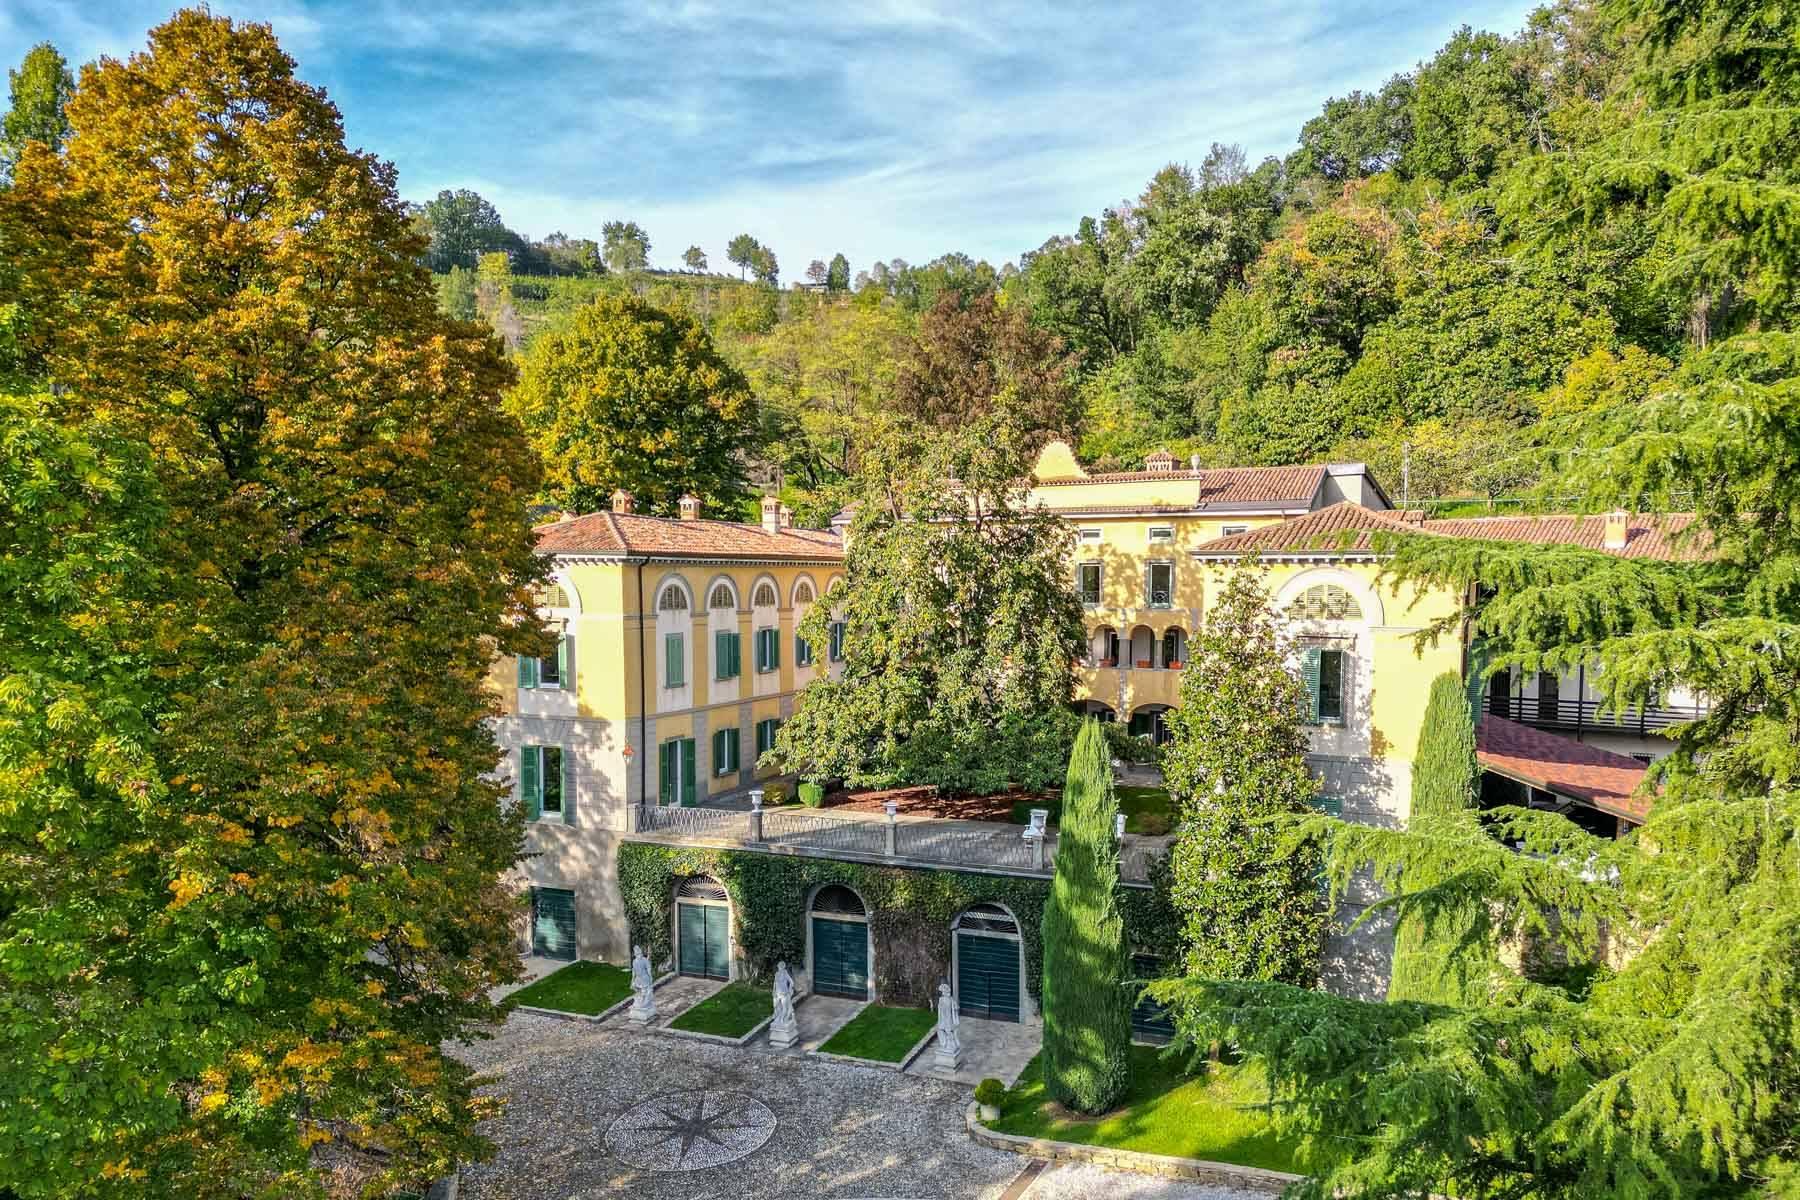 Splendid historic villa with park - 1